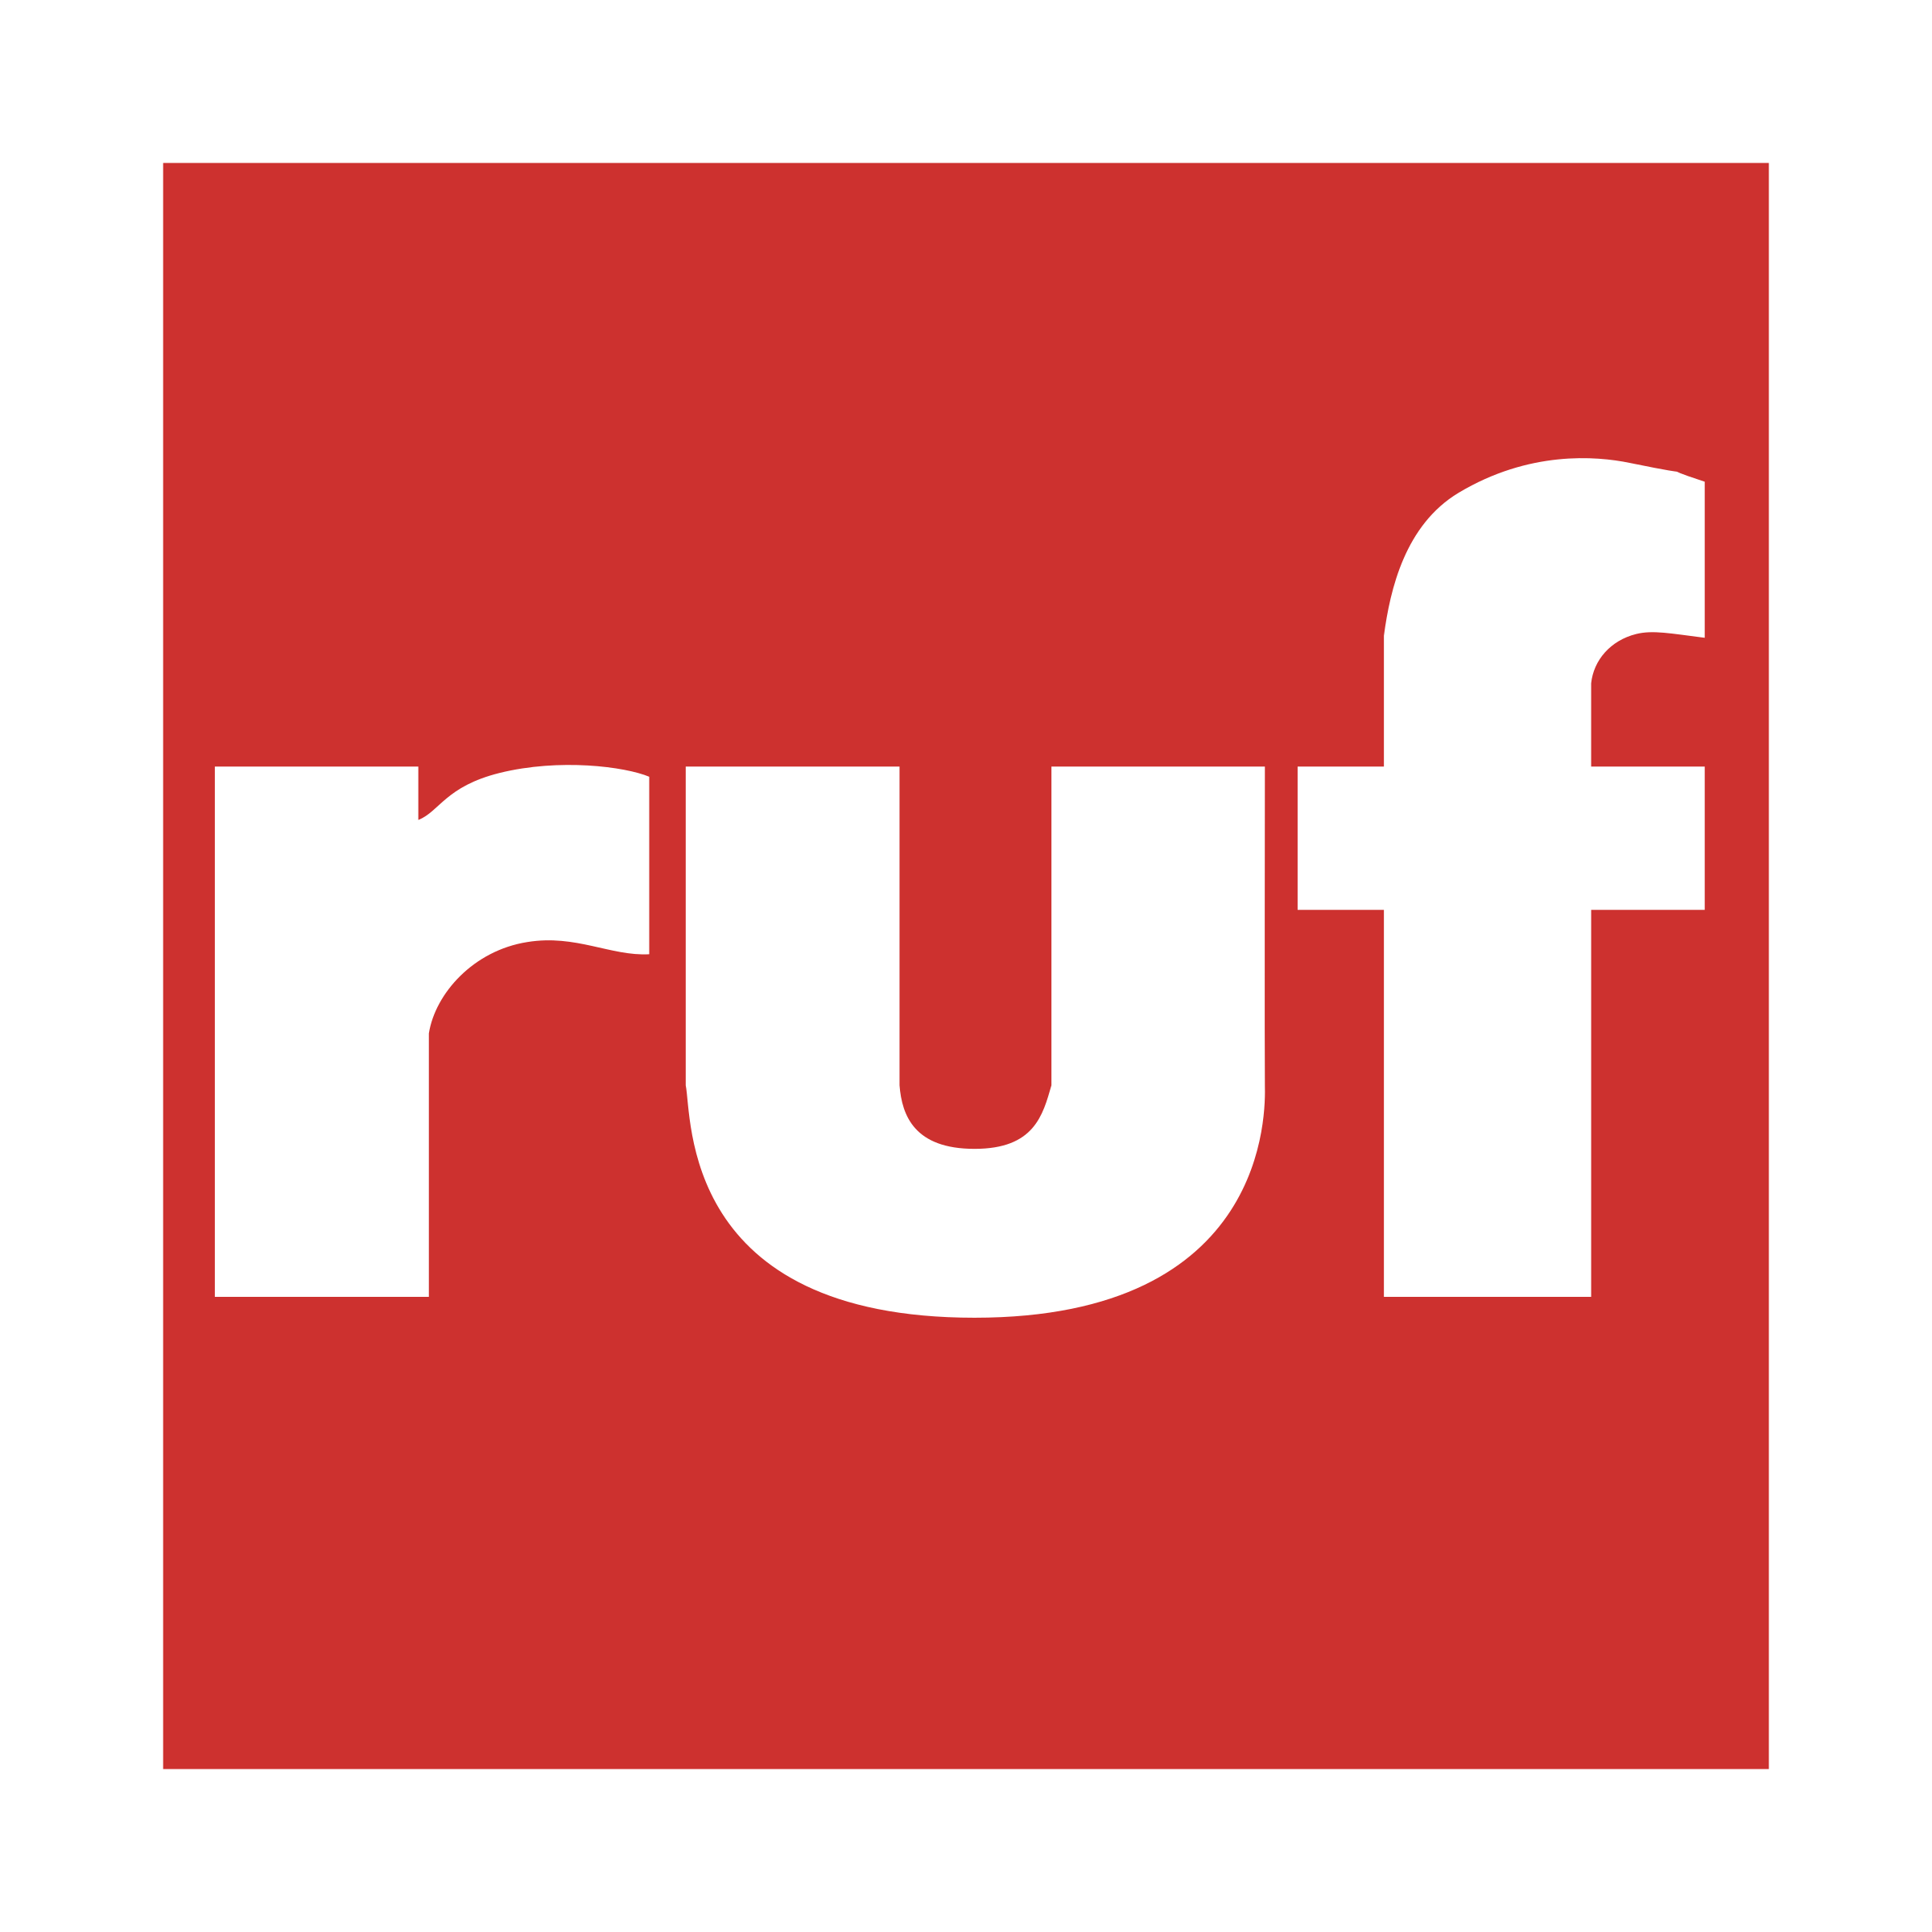 Ruf Logo - Ruf Logo PNG Transparent & SVG Vector - Freebie Supply